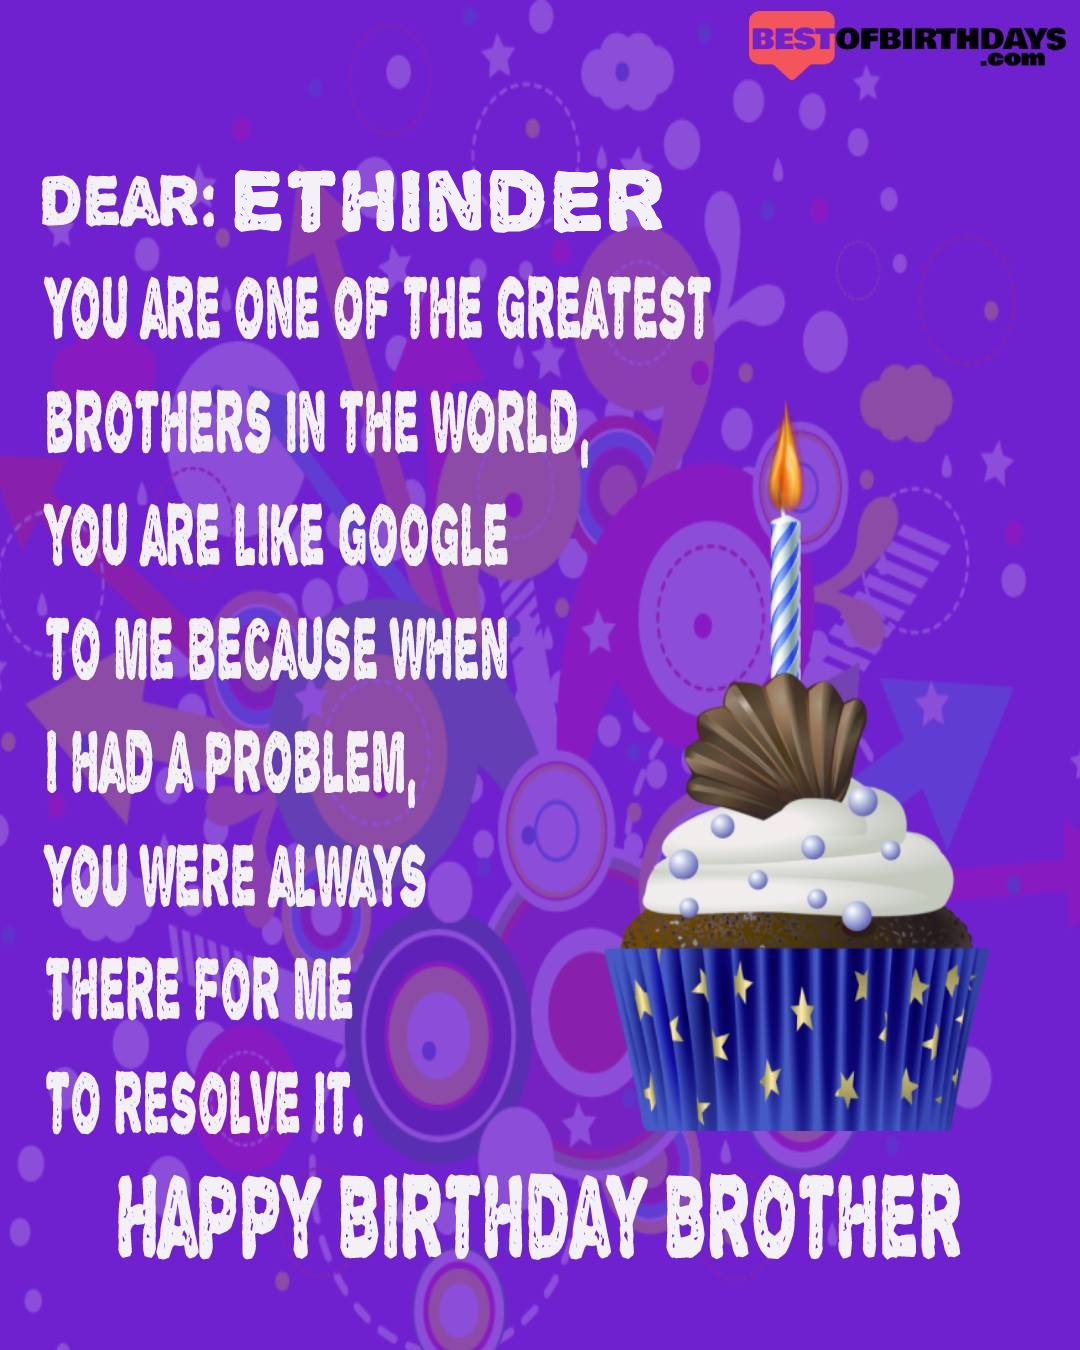 Happy birthday ethinder bhai brother bro